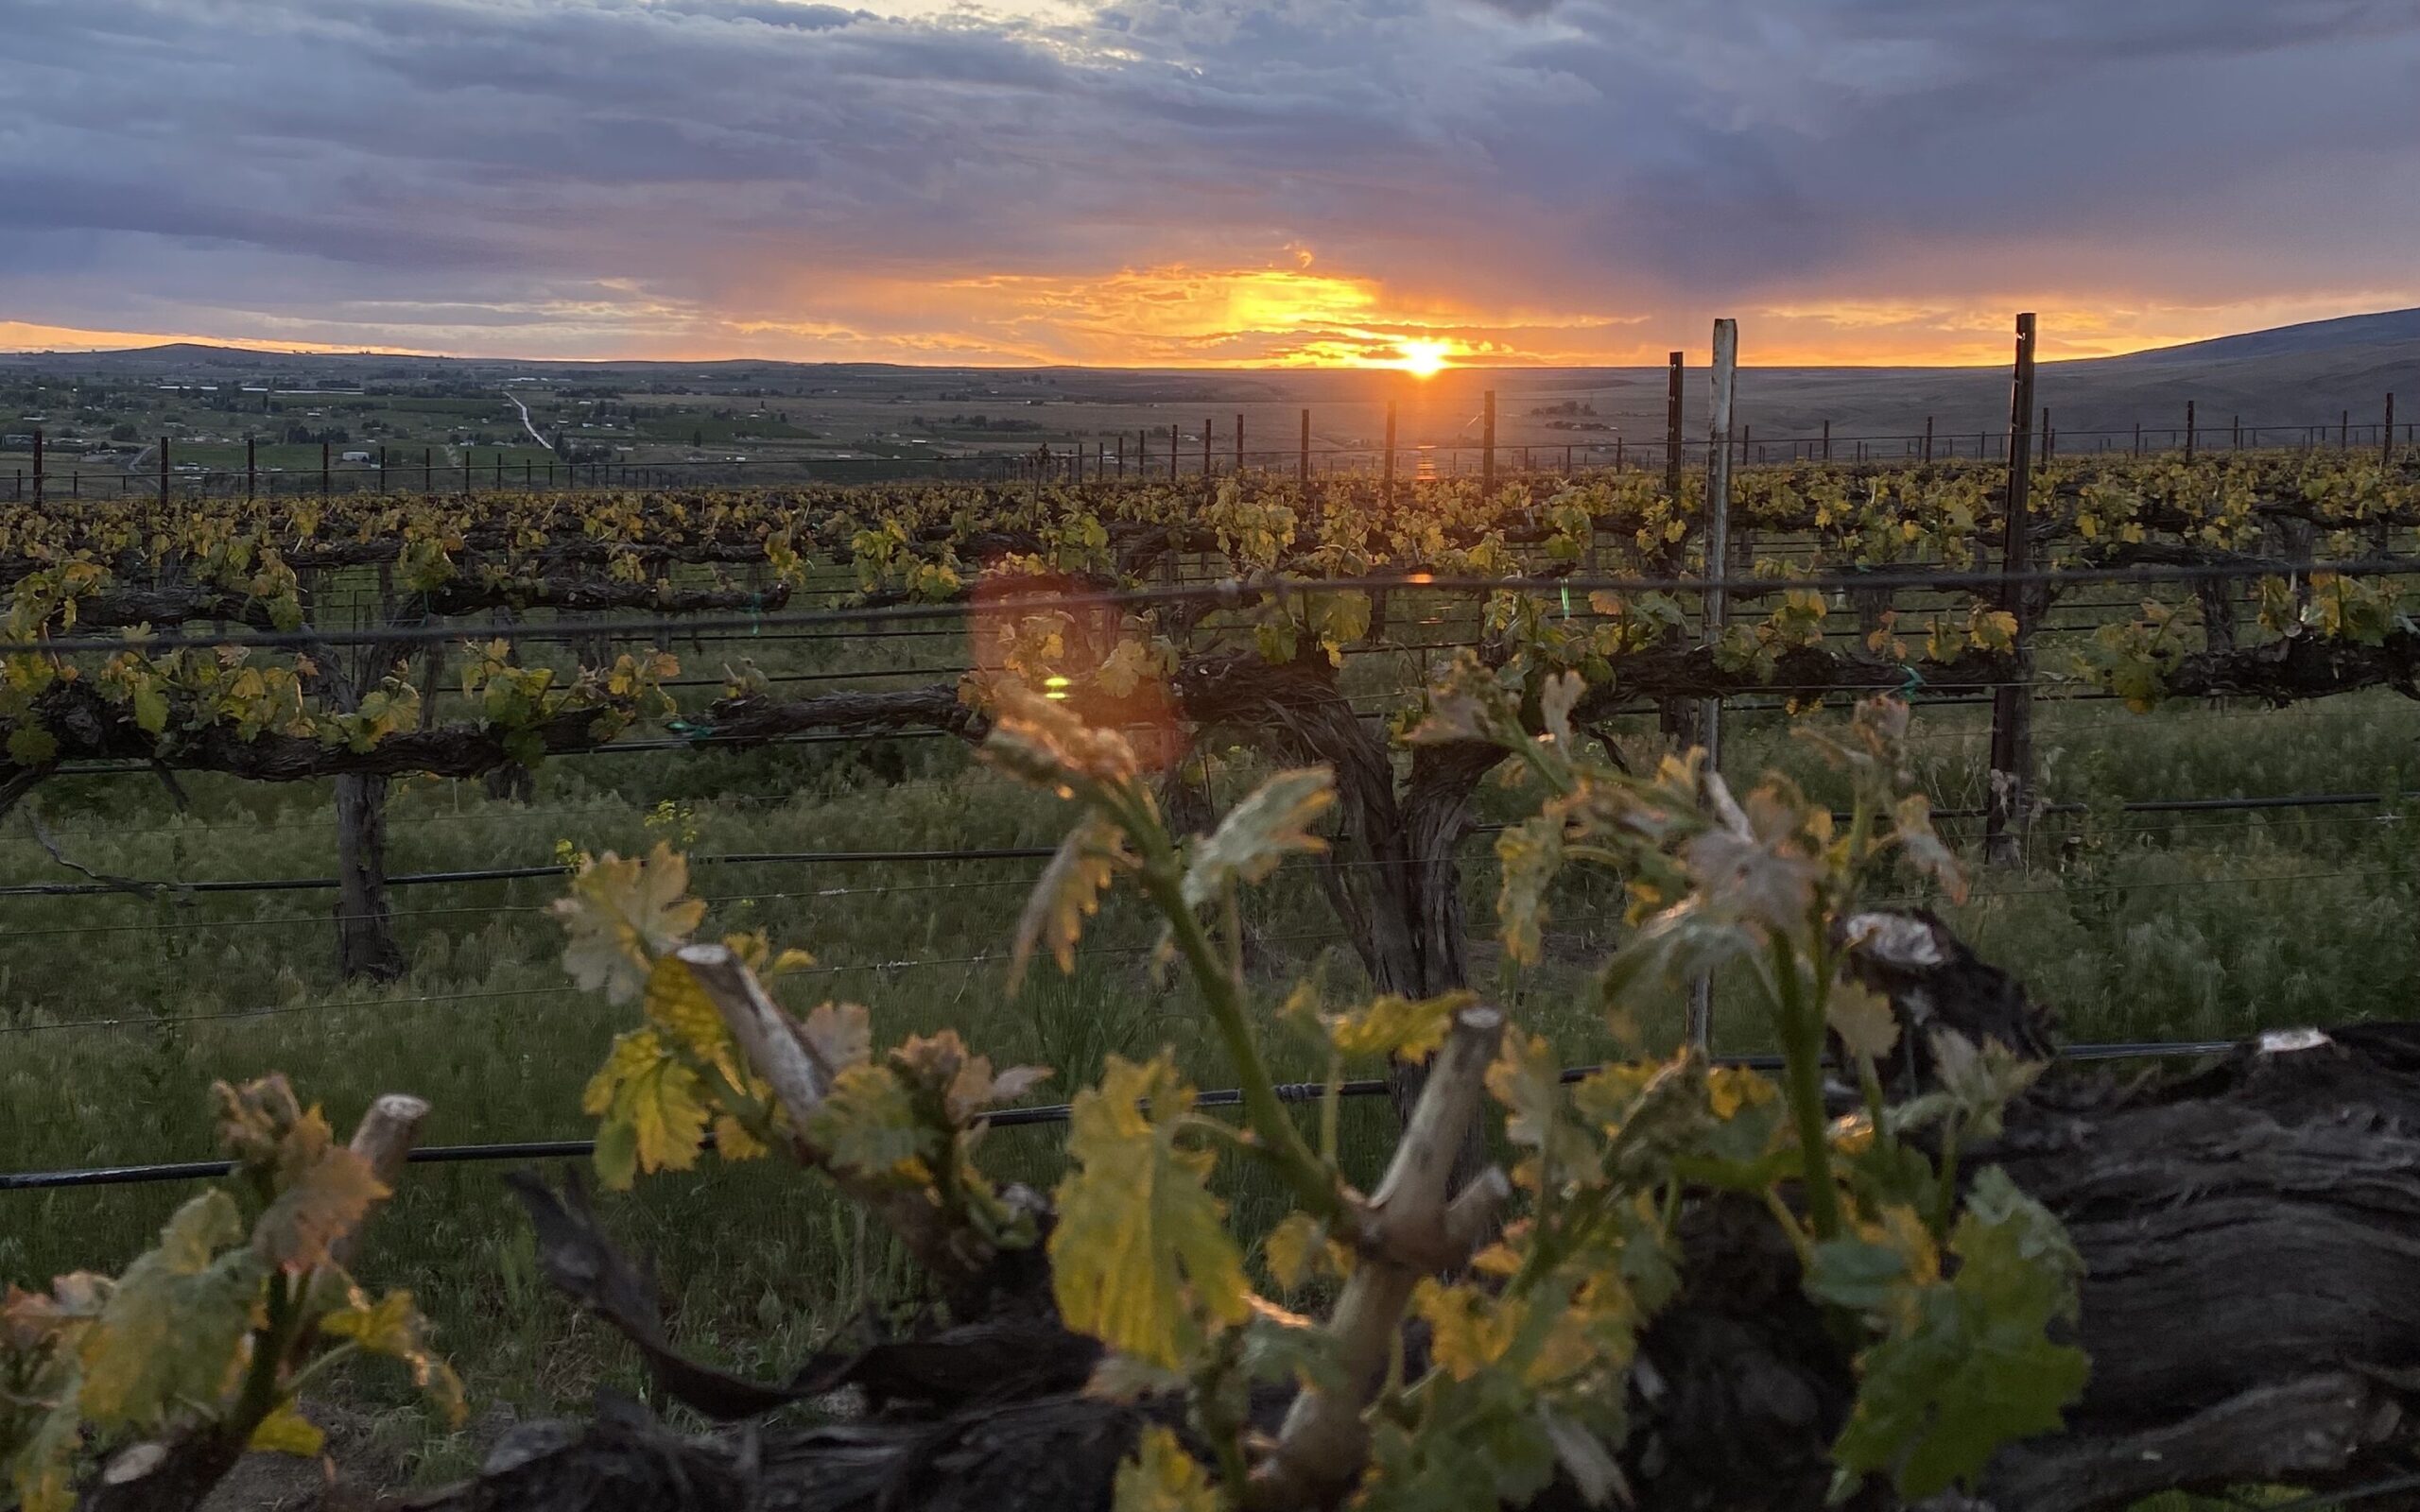 A vineyard at sunset.